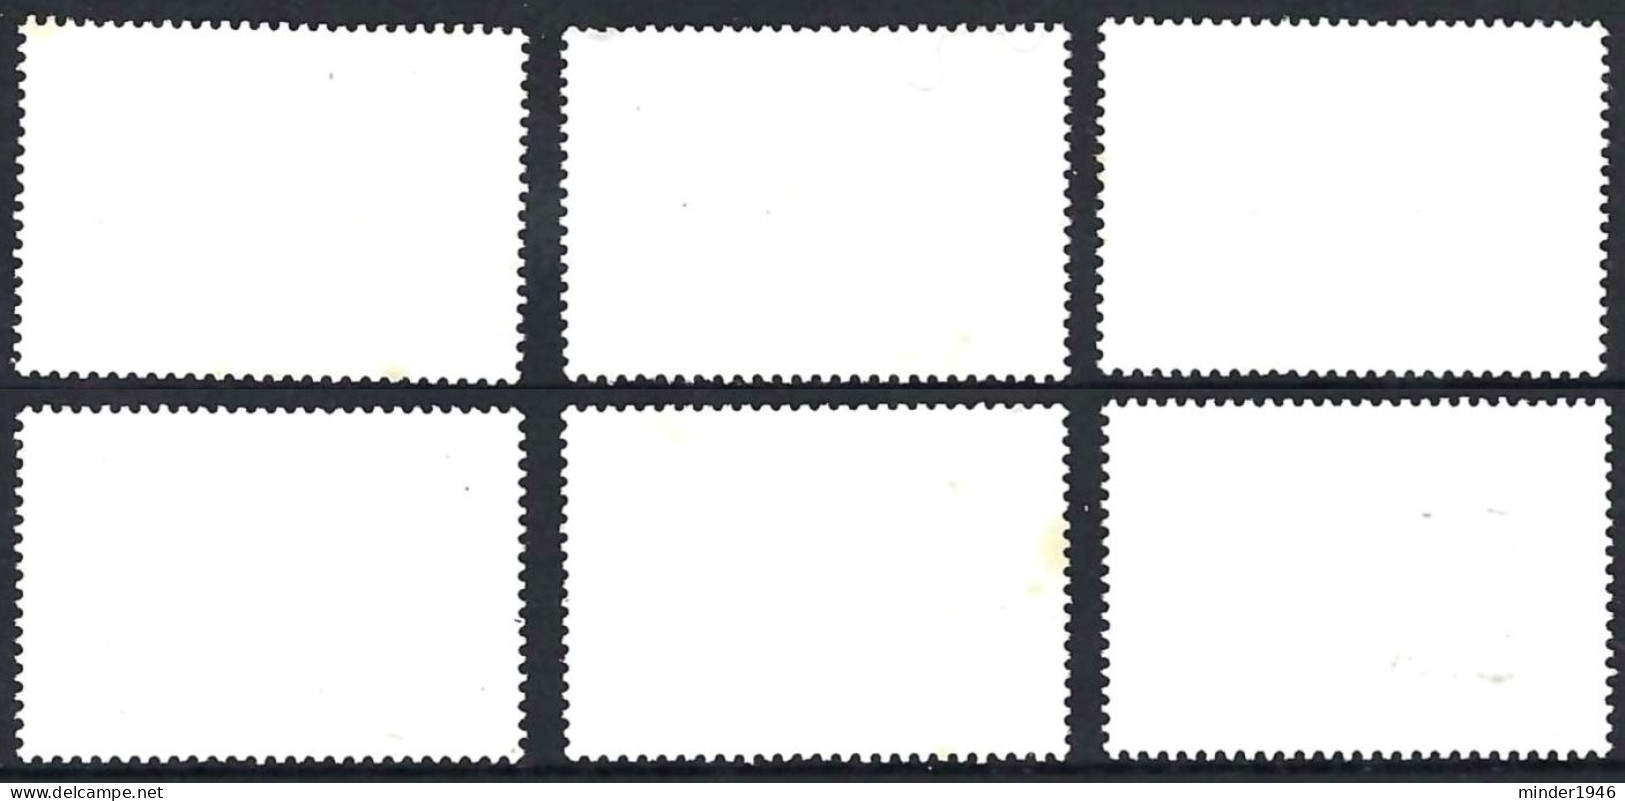 AUSTRALIA 1995 45c Multicoloured, Marine Life Set SG1563/68 FU - Used Stamps